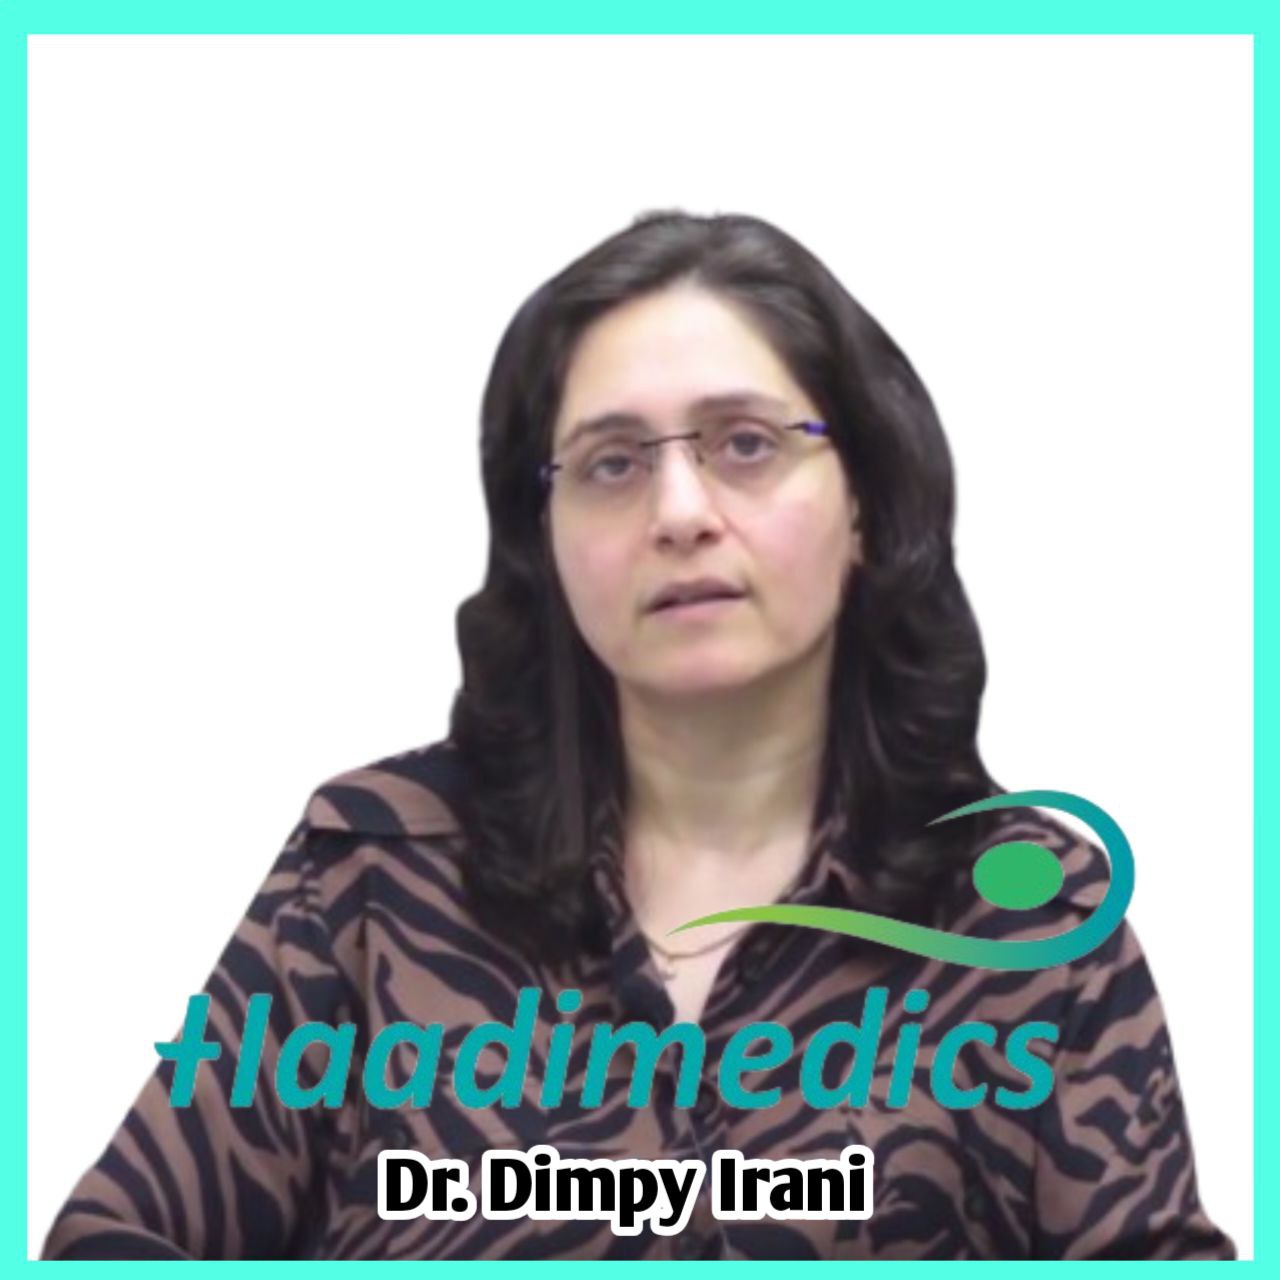 Dr. Dimply Irani